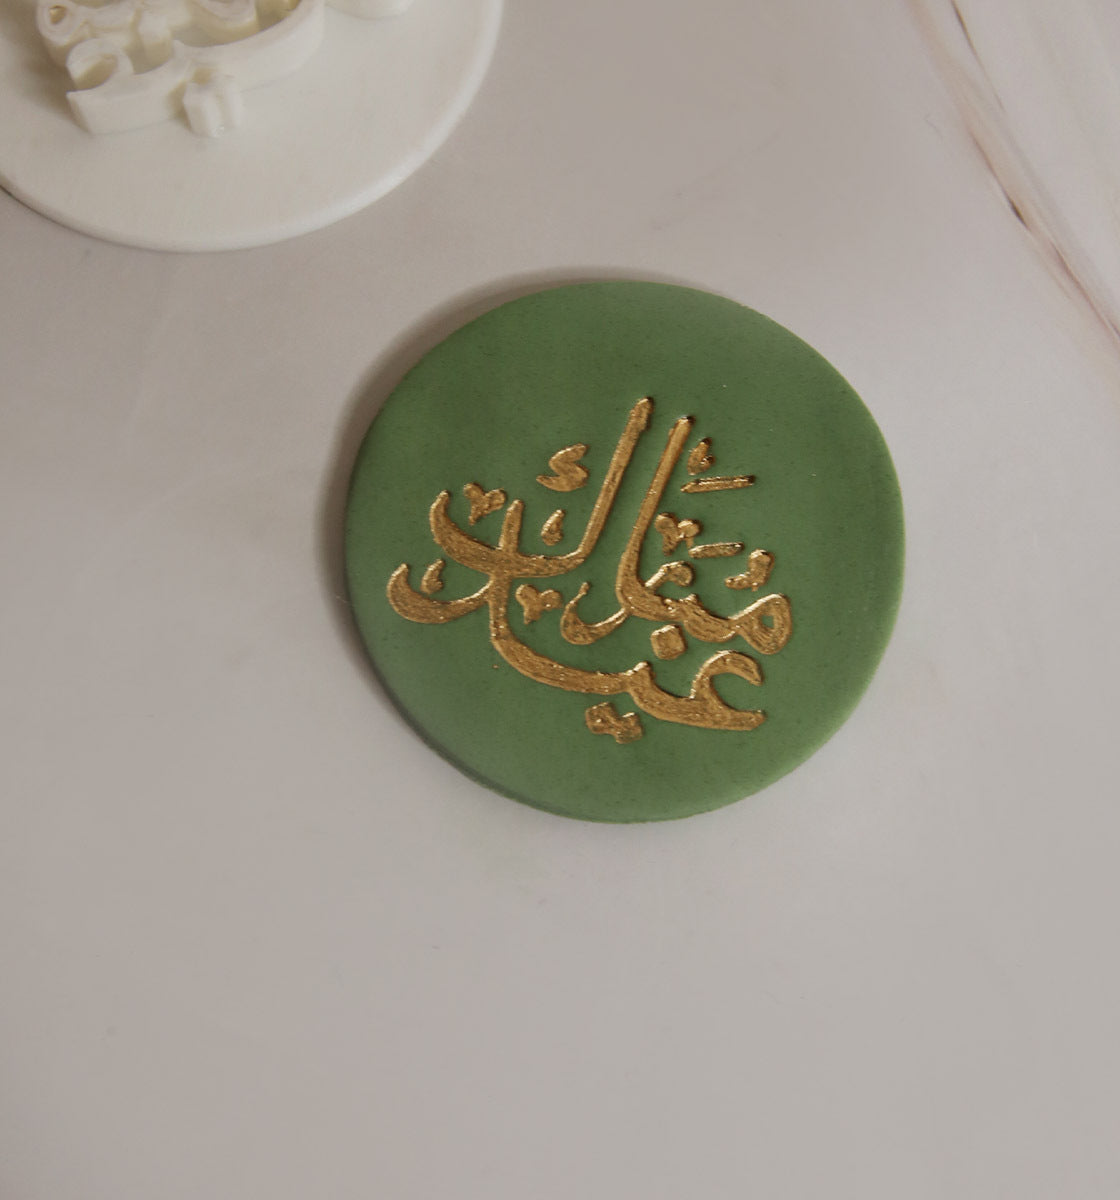 Eid Mubarak - Cake Stamp